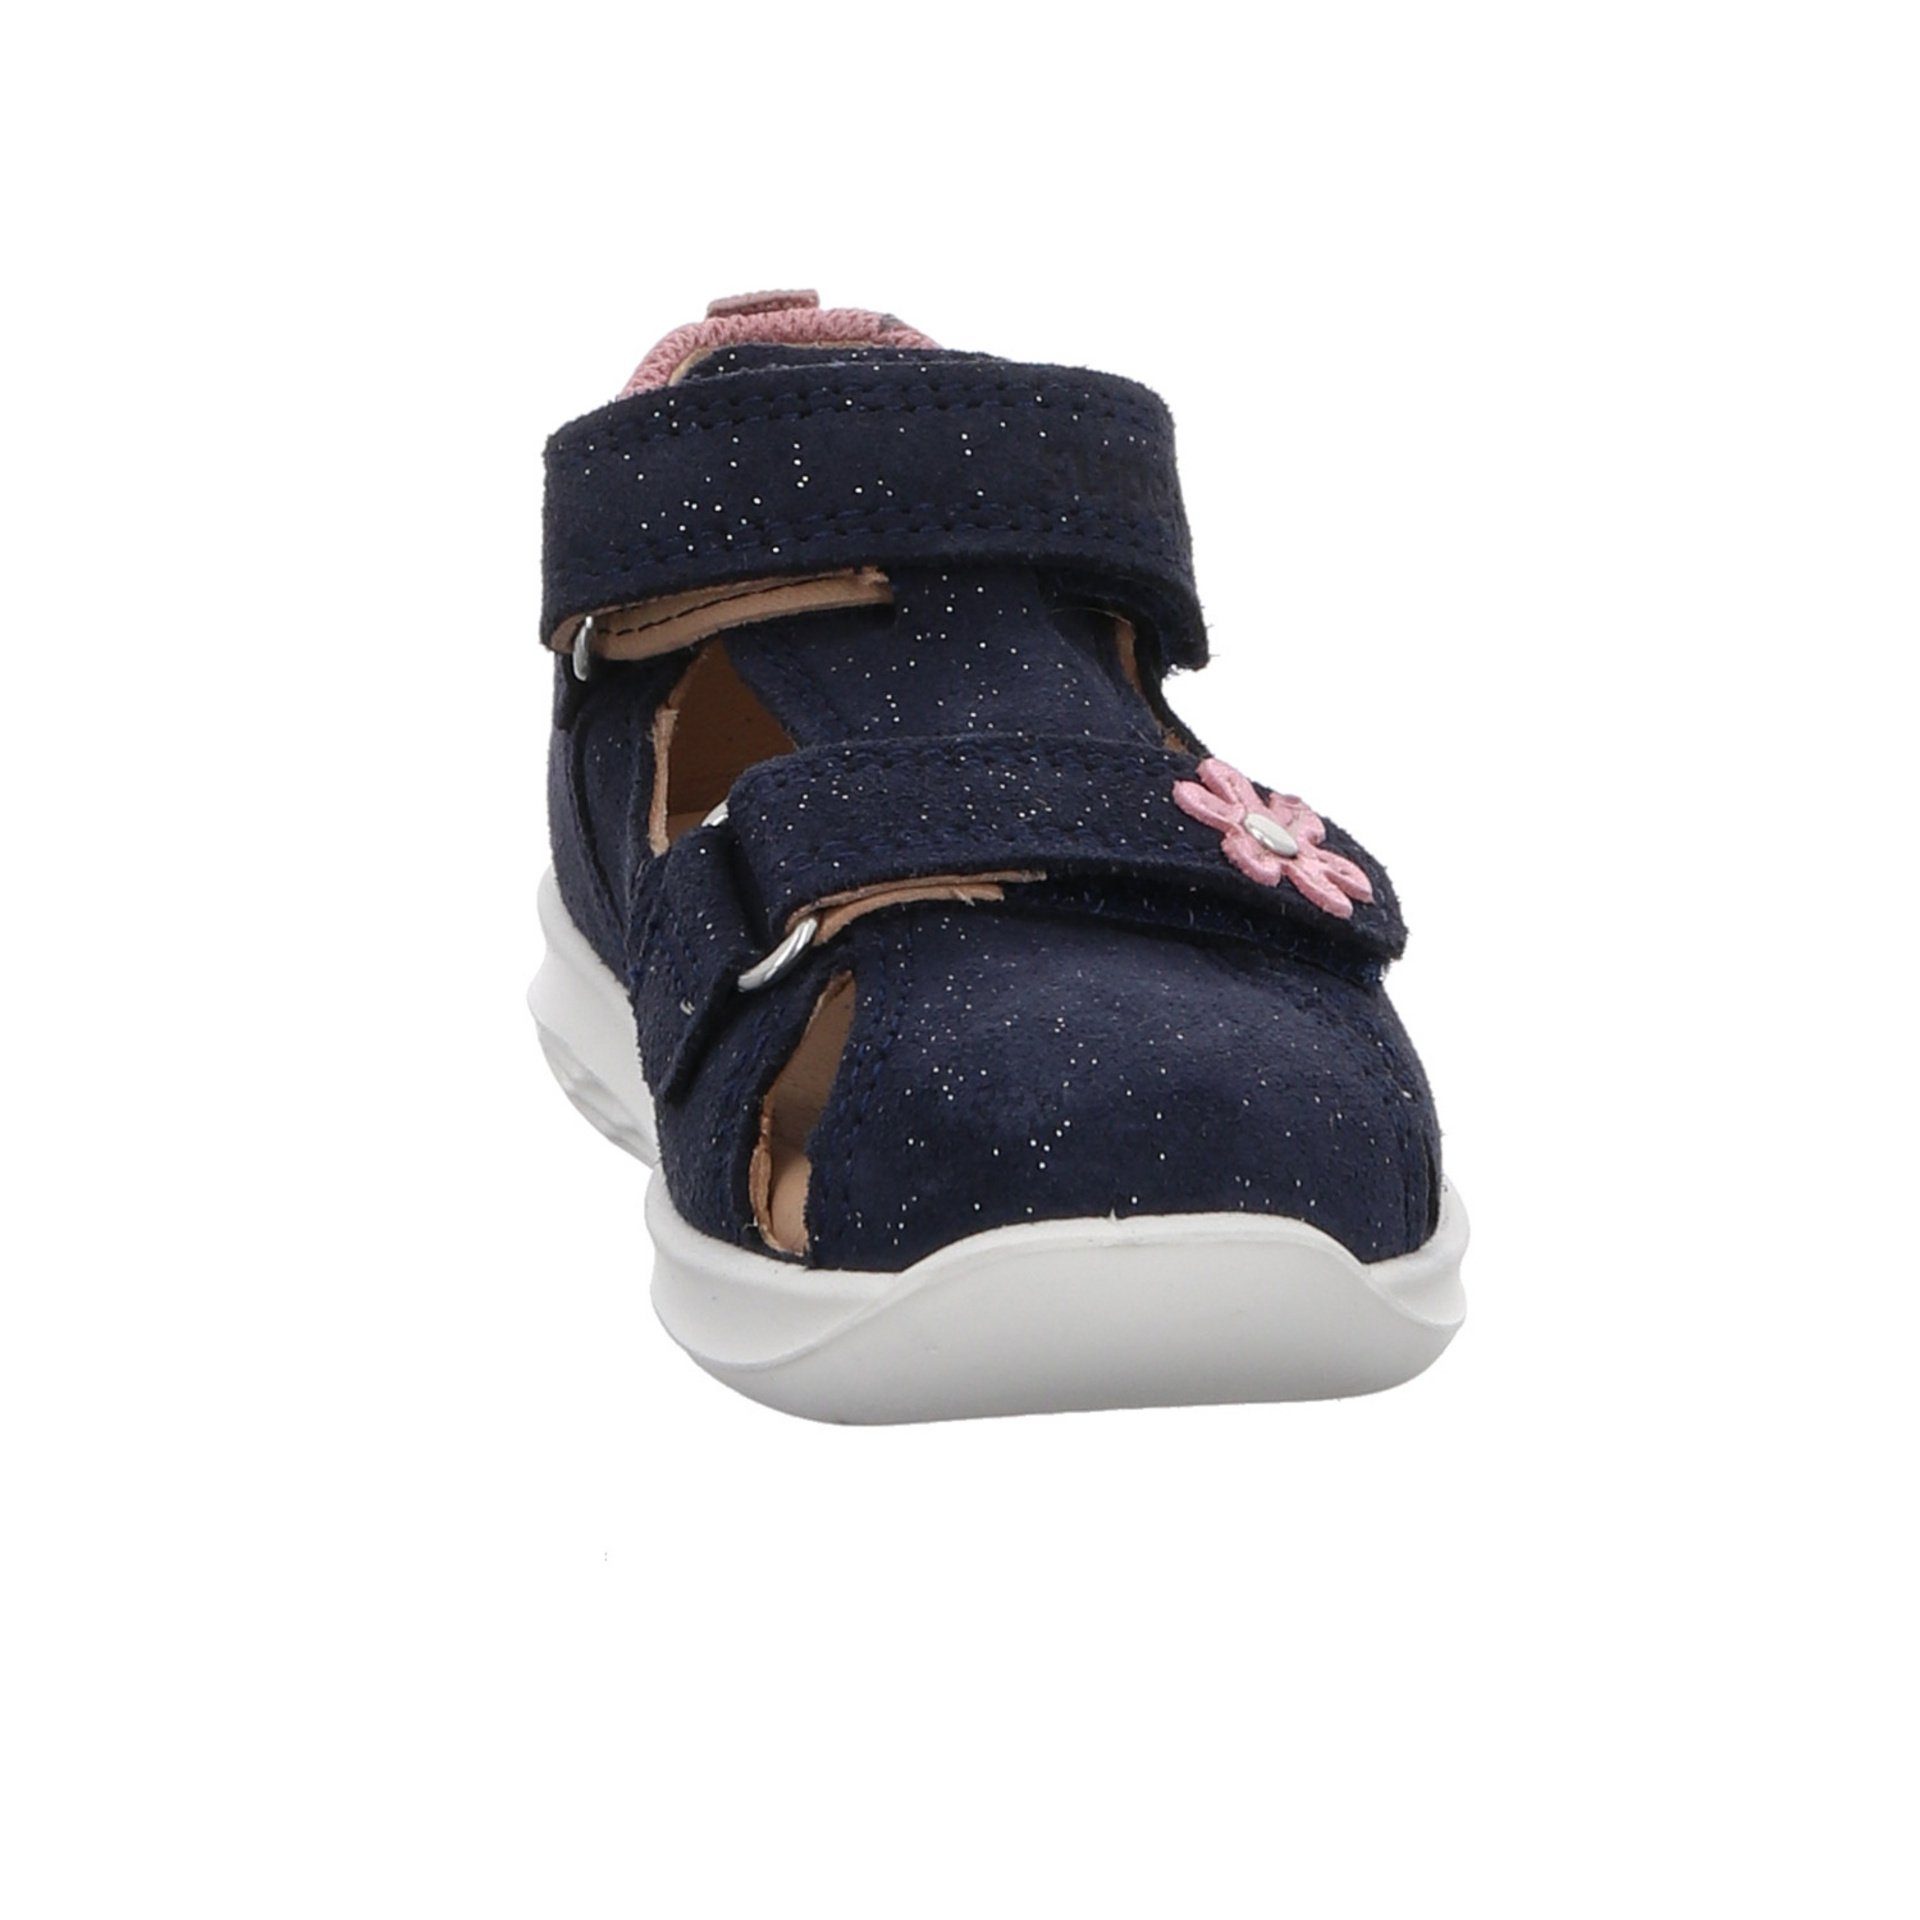 Superfit Mädchen sonst Bumblebee Minilette Leder-/Textilkombination Schuhe Sandale Sandalen blau Kombi